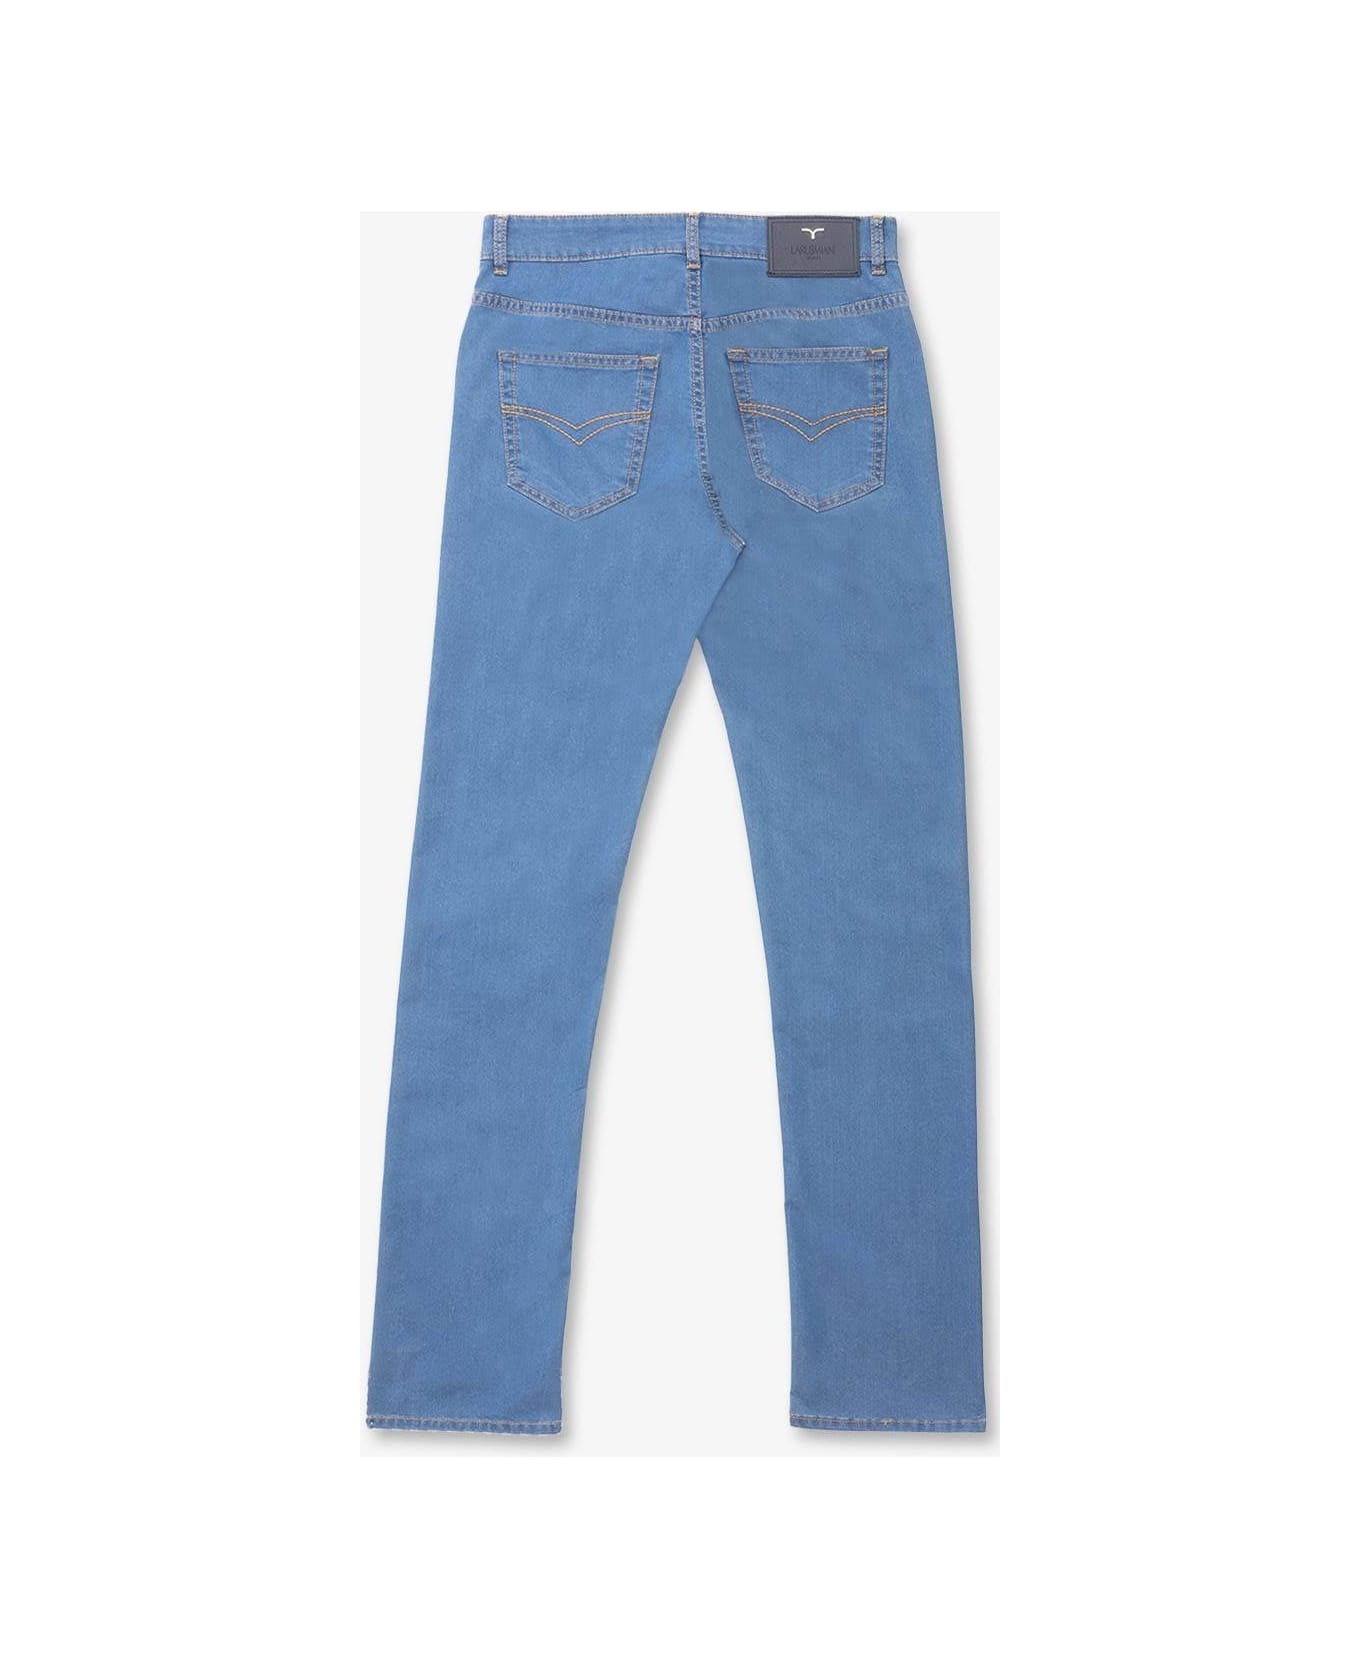 Larusmiani Fuji Trousers Jeans Jeans - LightBlue デニム